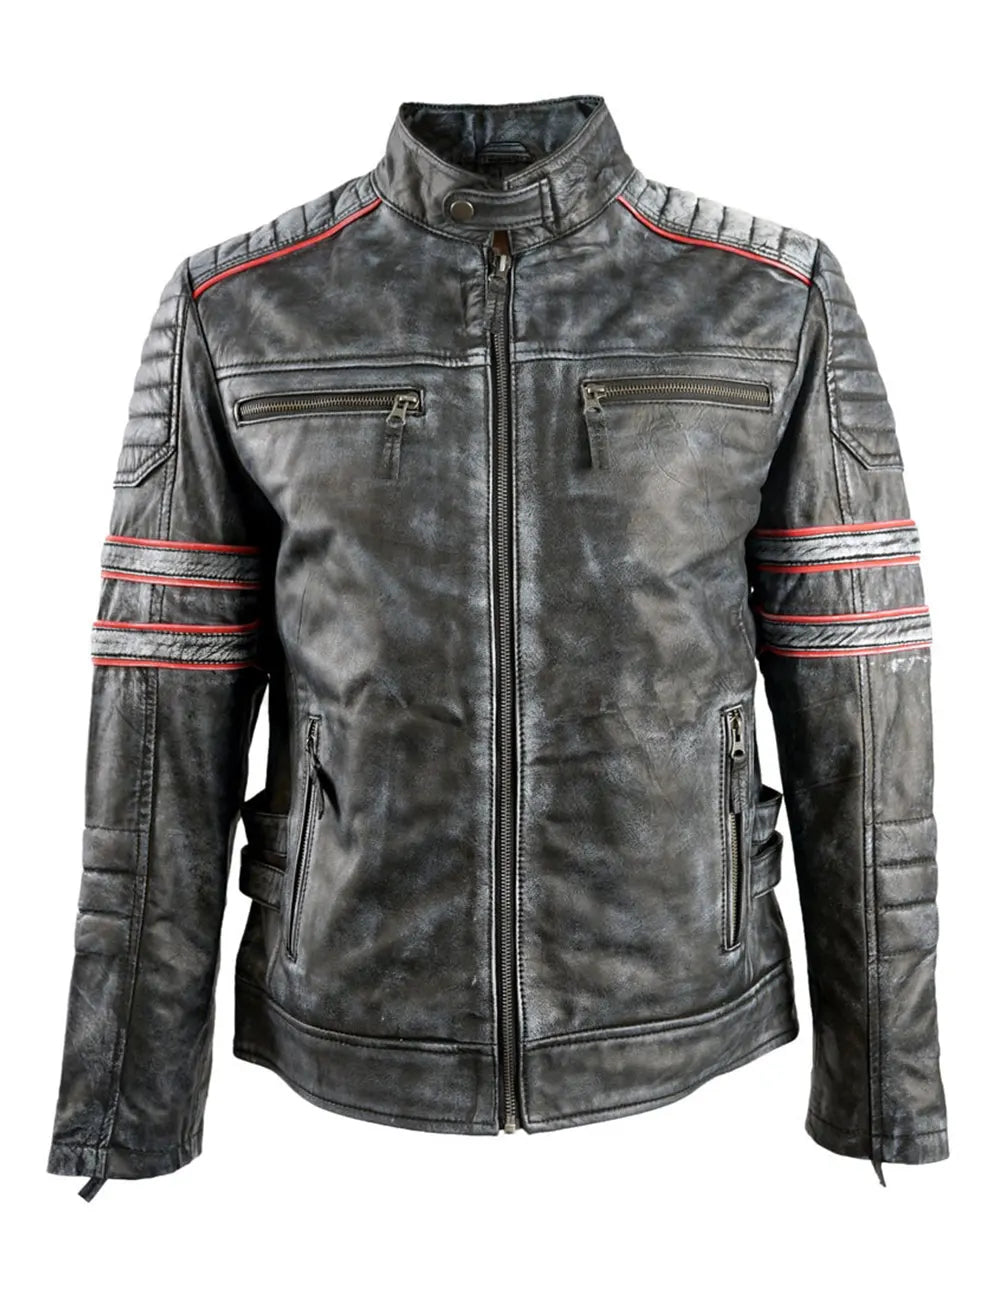 Mens Motorcycle Retro Biker Leather Jacket